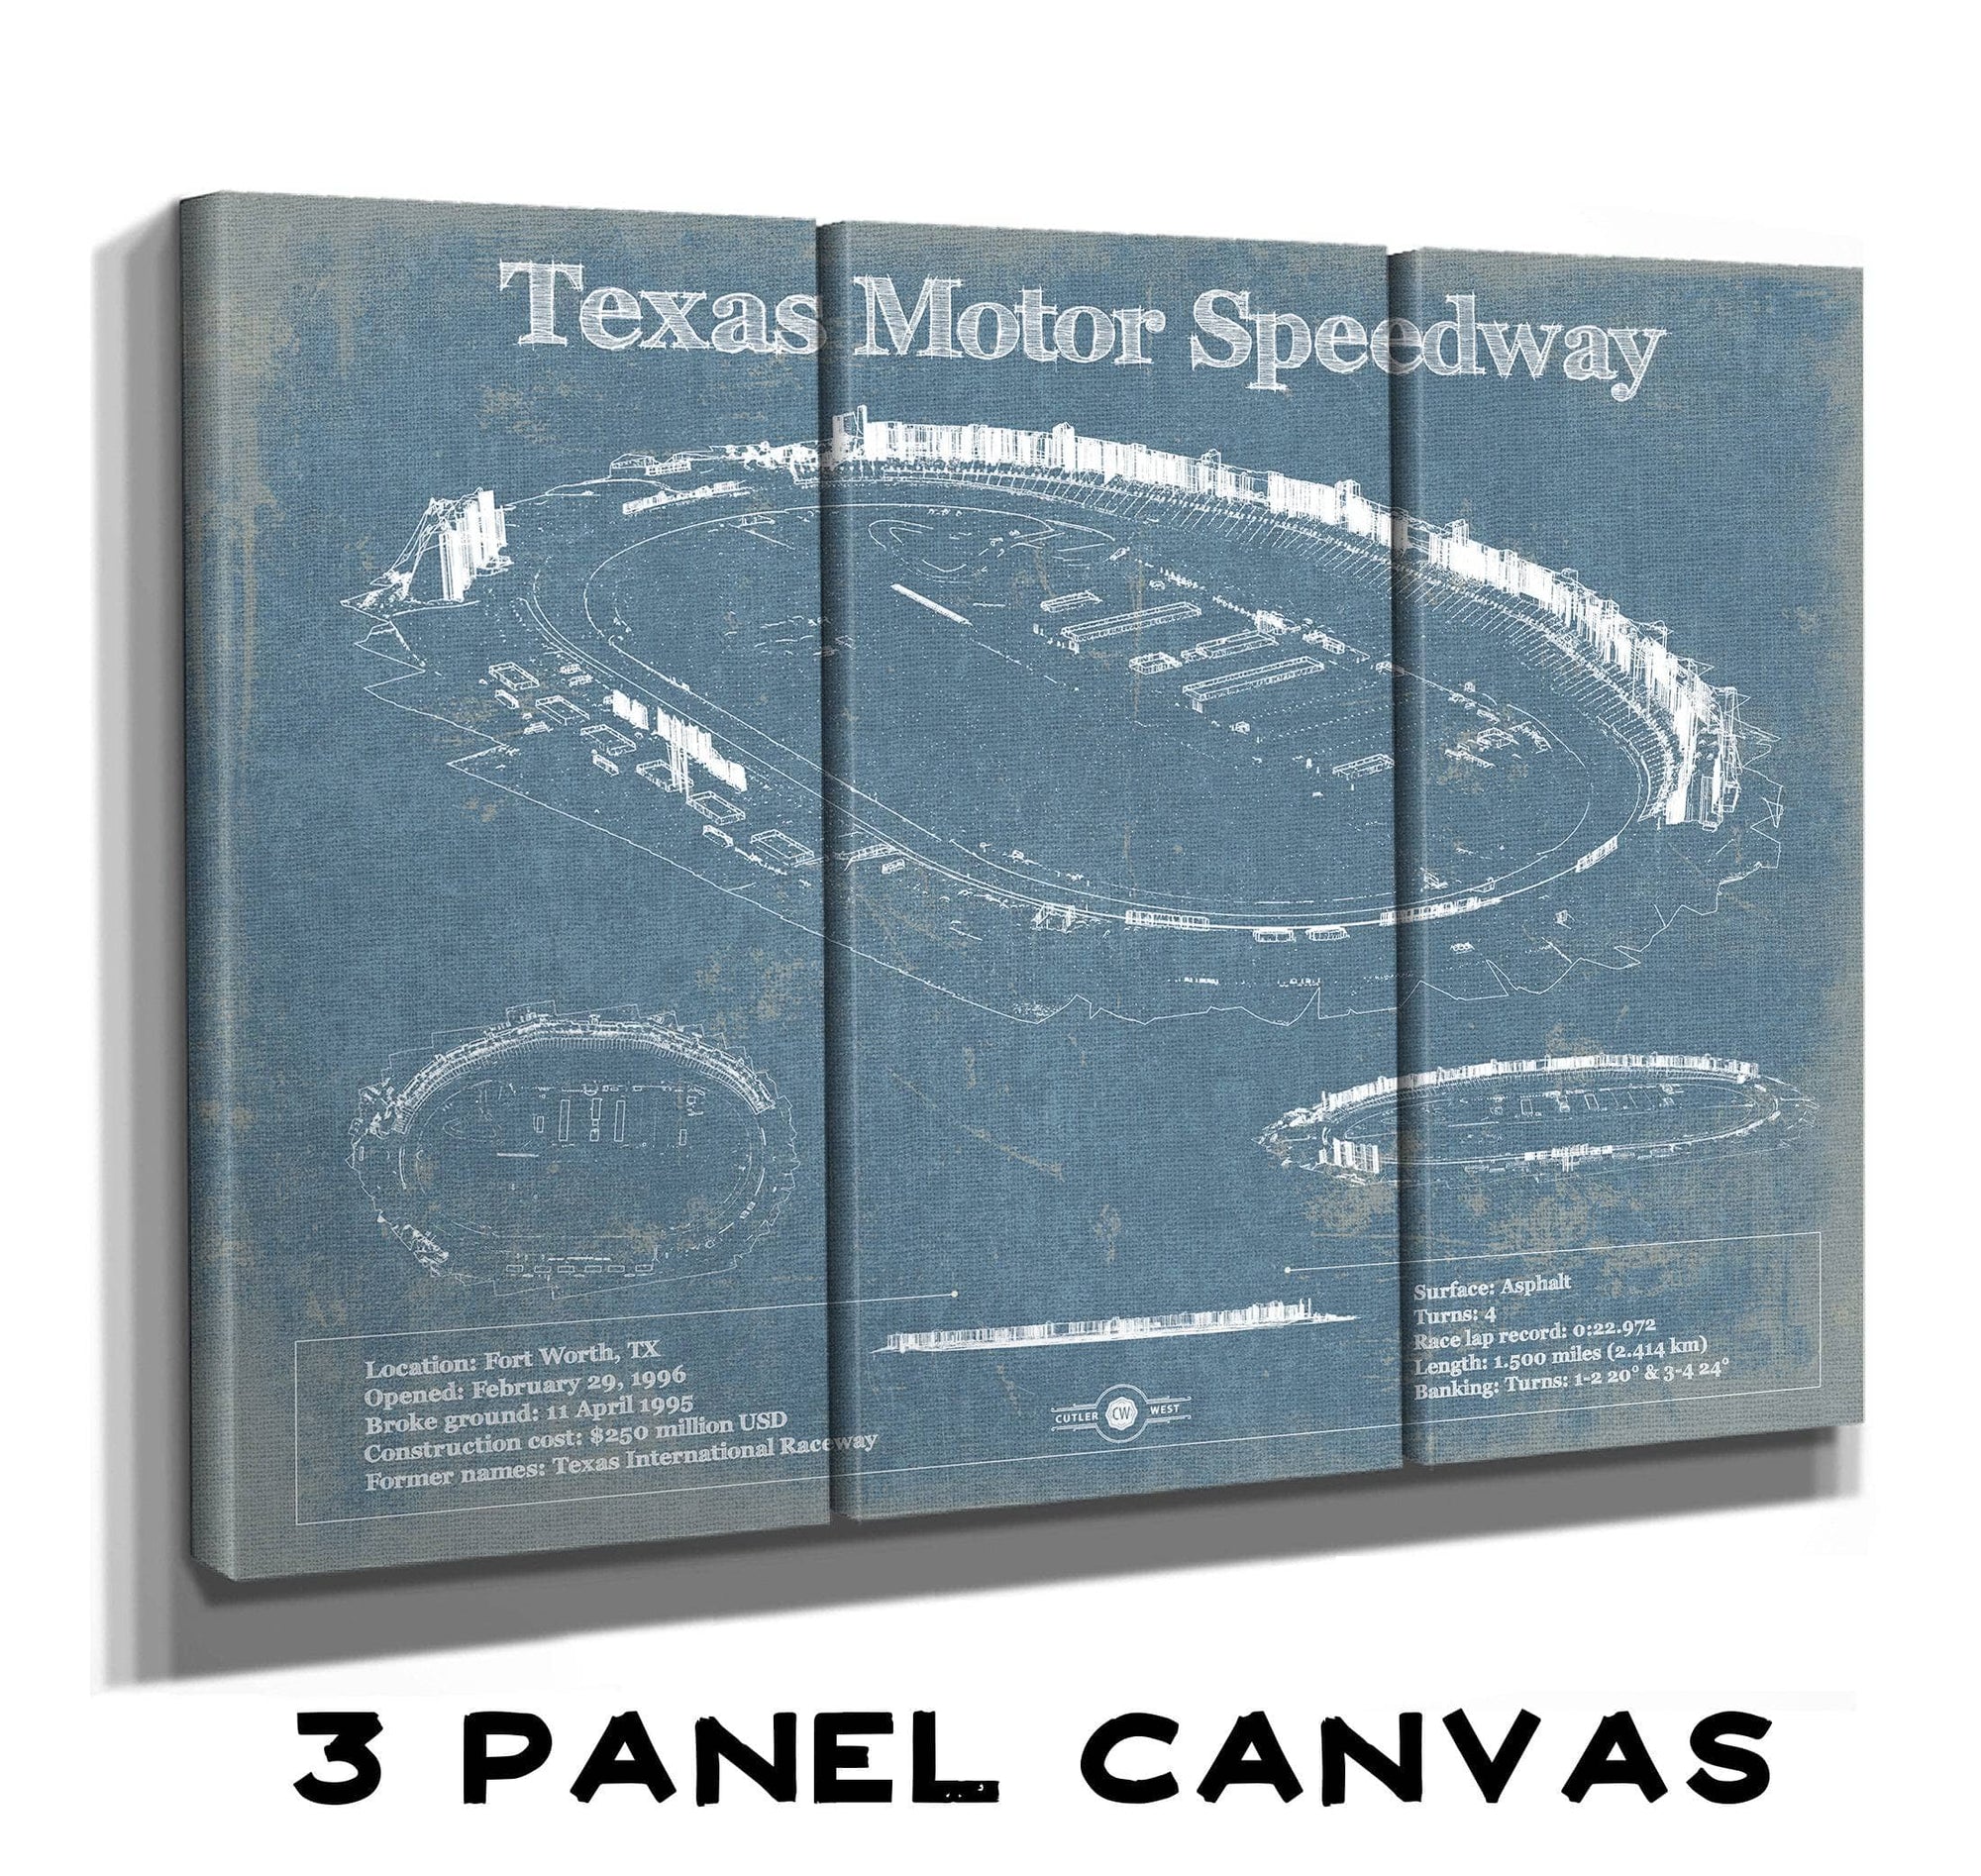 Texas Motor Speedway Blueprint NASCAR Race Track Print